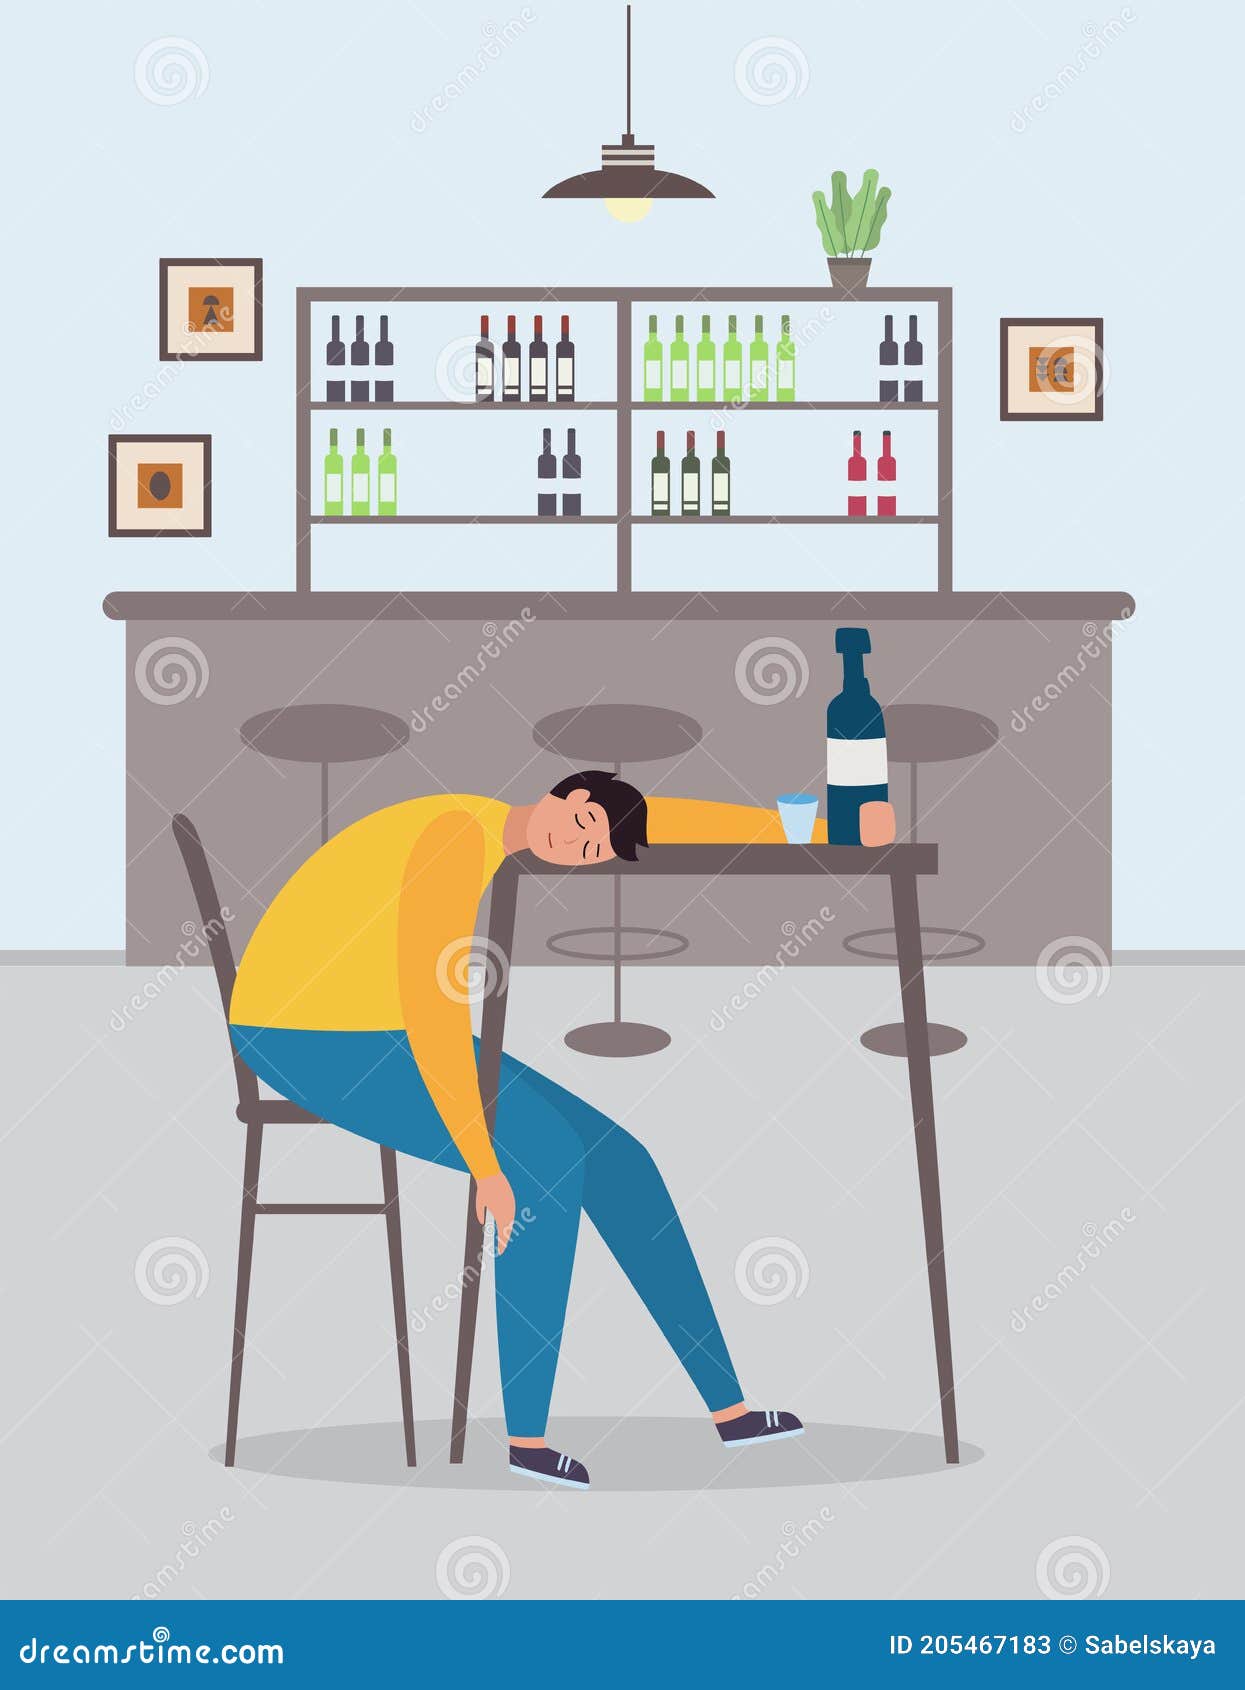 Drunk Man Cartoon Character Asleep in the Bar Flat Vector Illustration ...